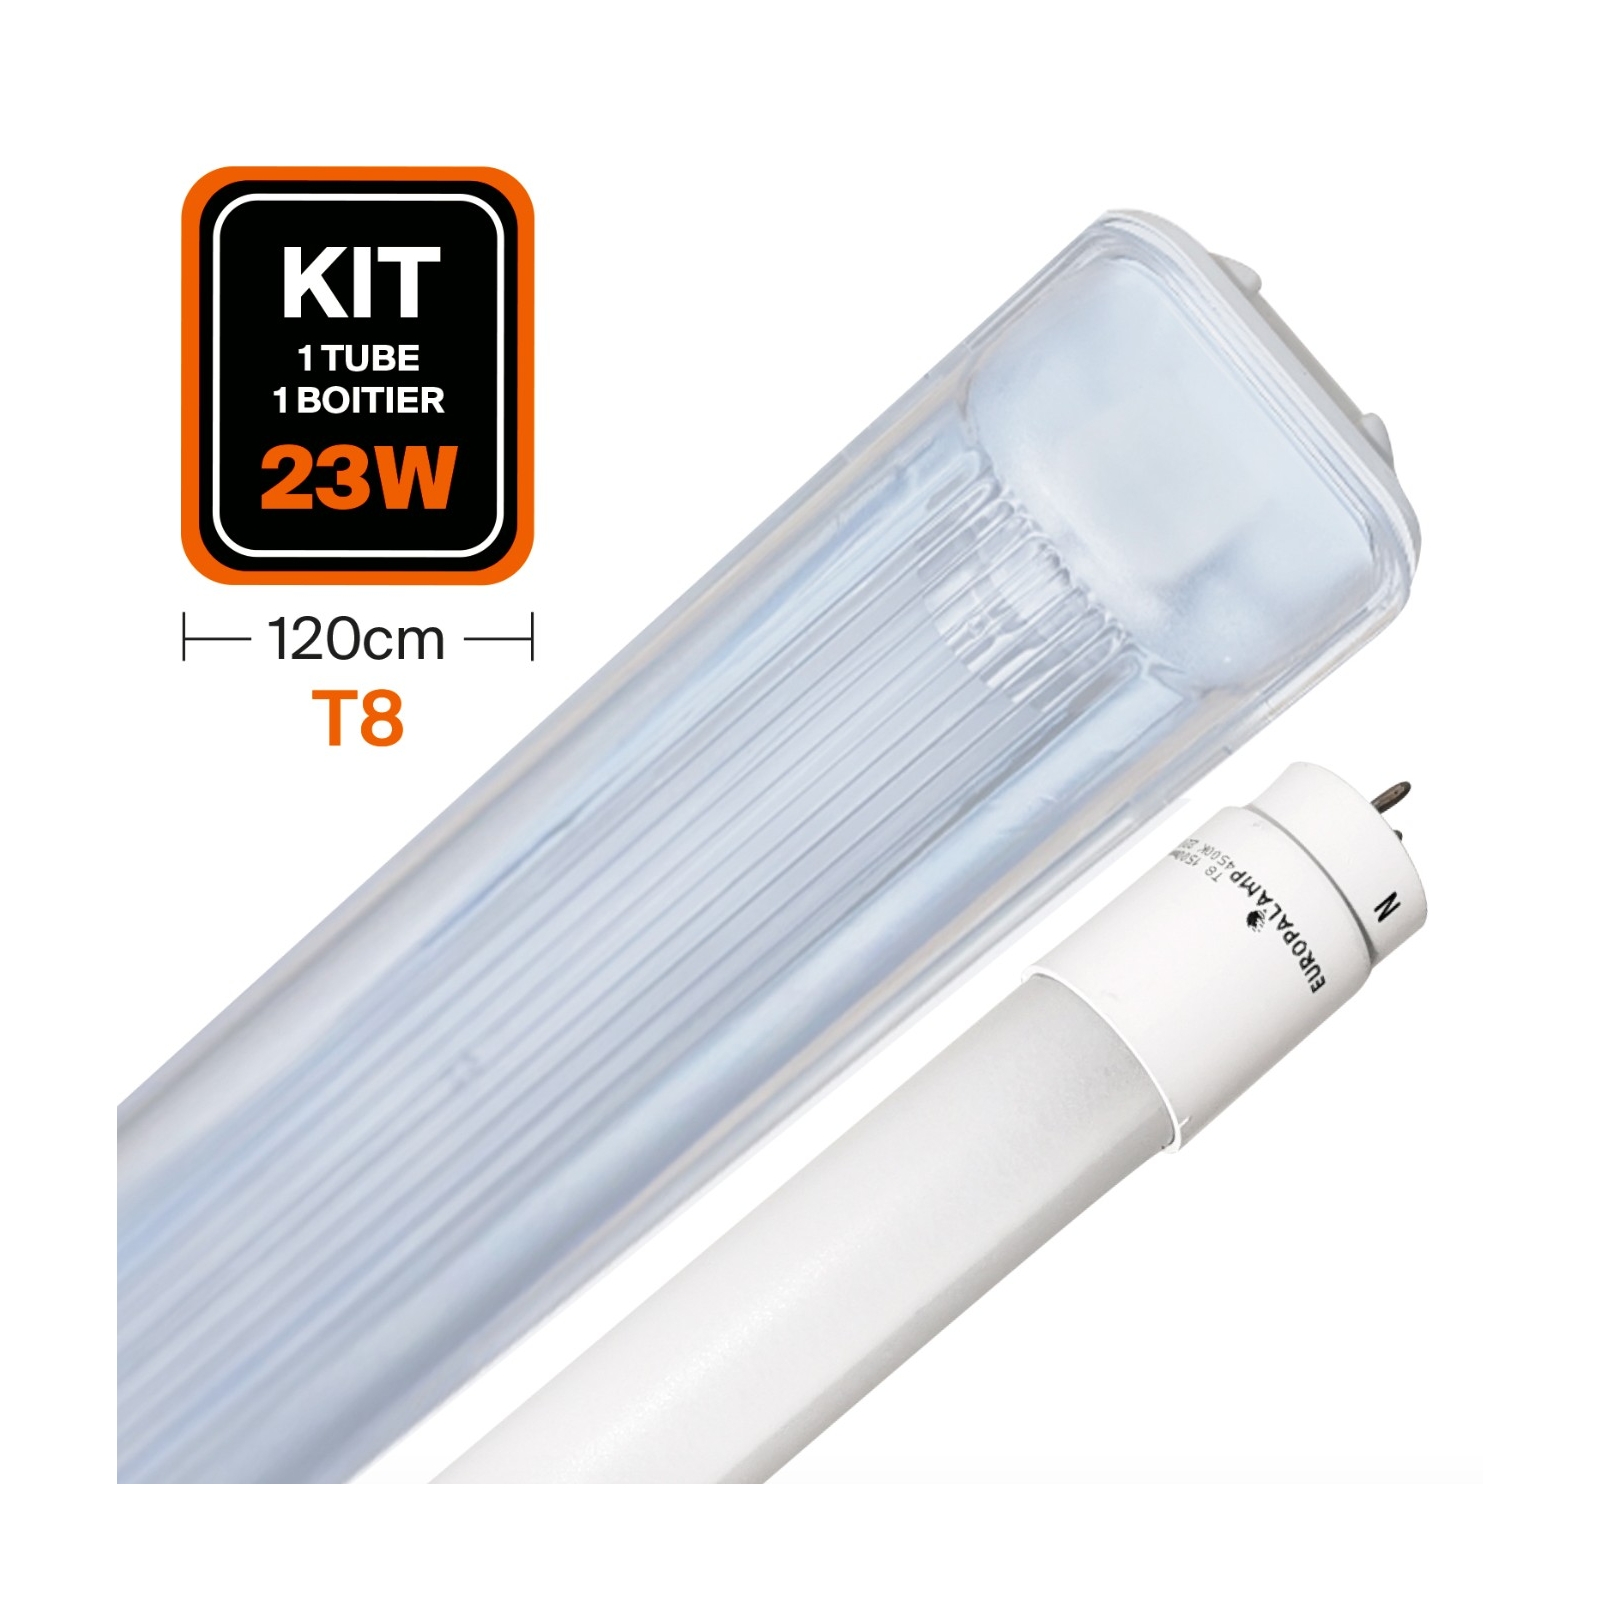 Kit Tube LED T8 23W + Boitier Etanche 120cm